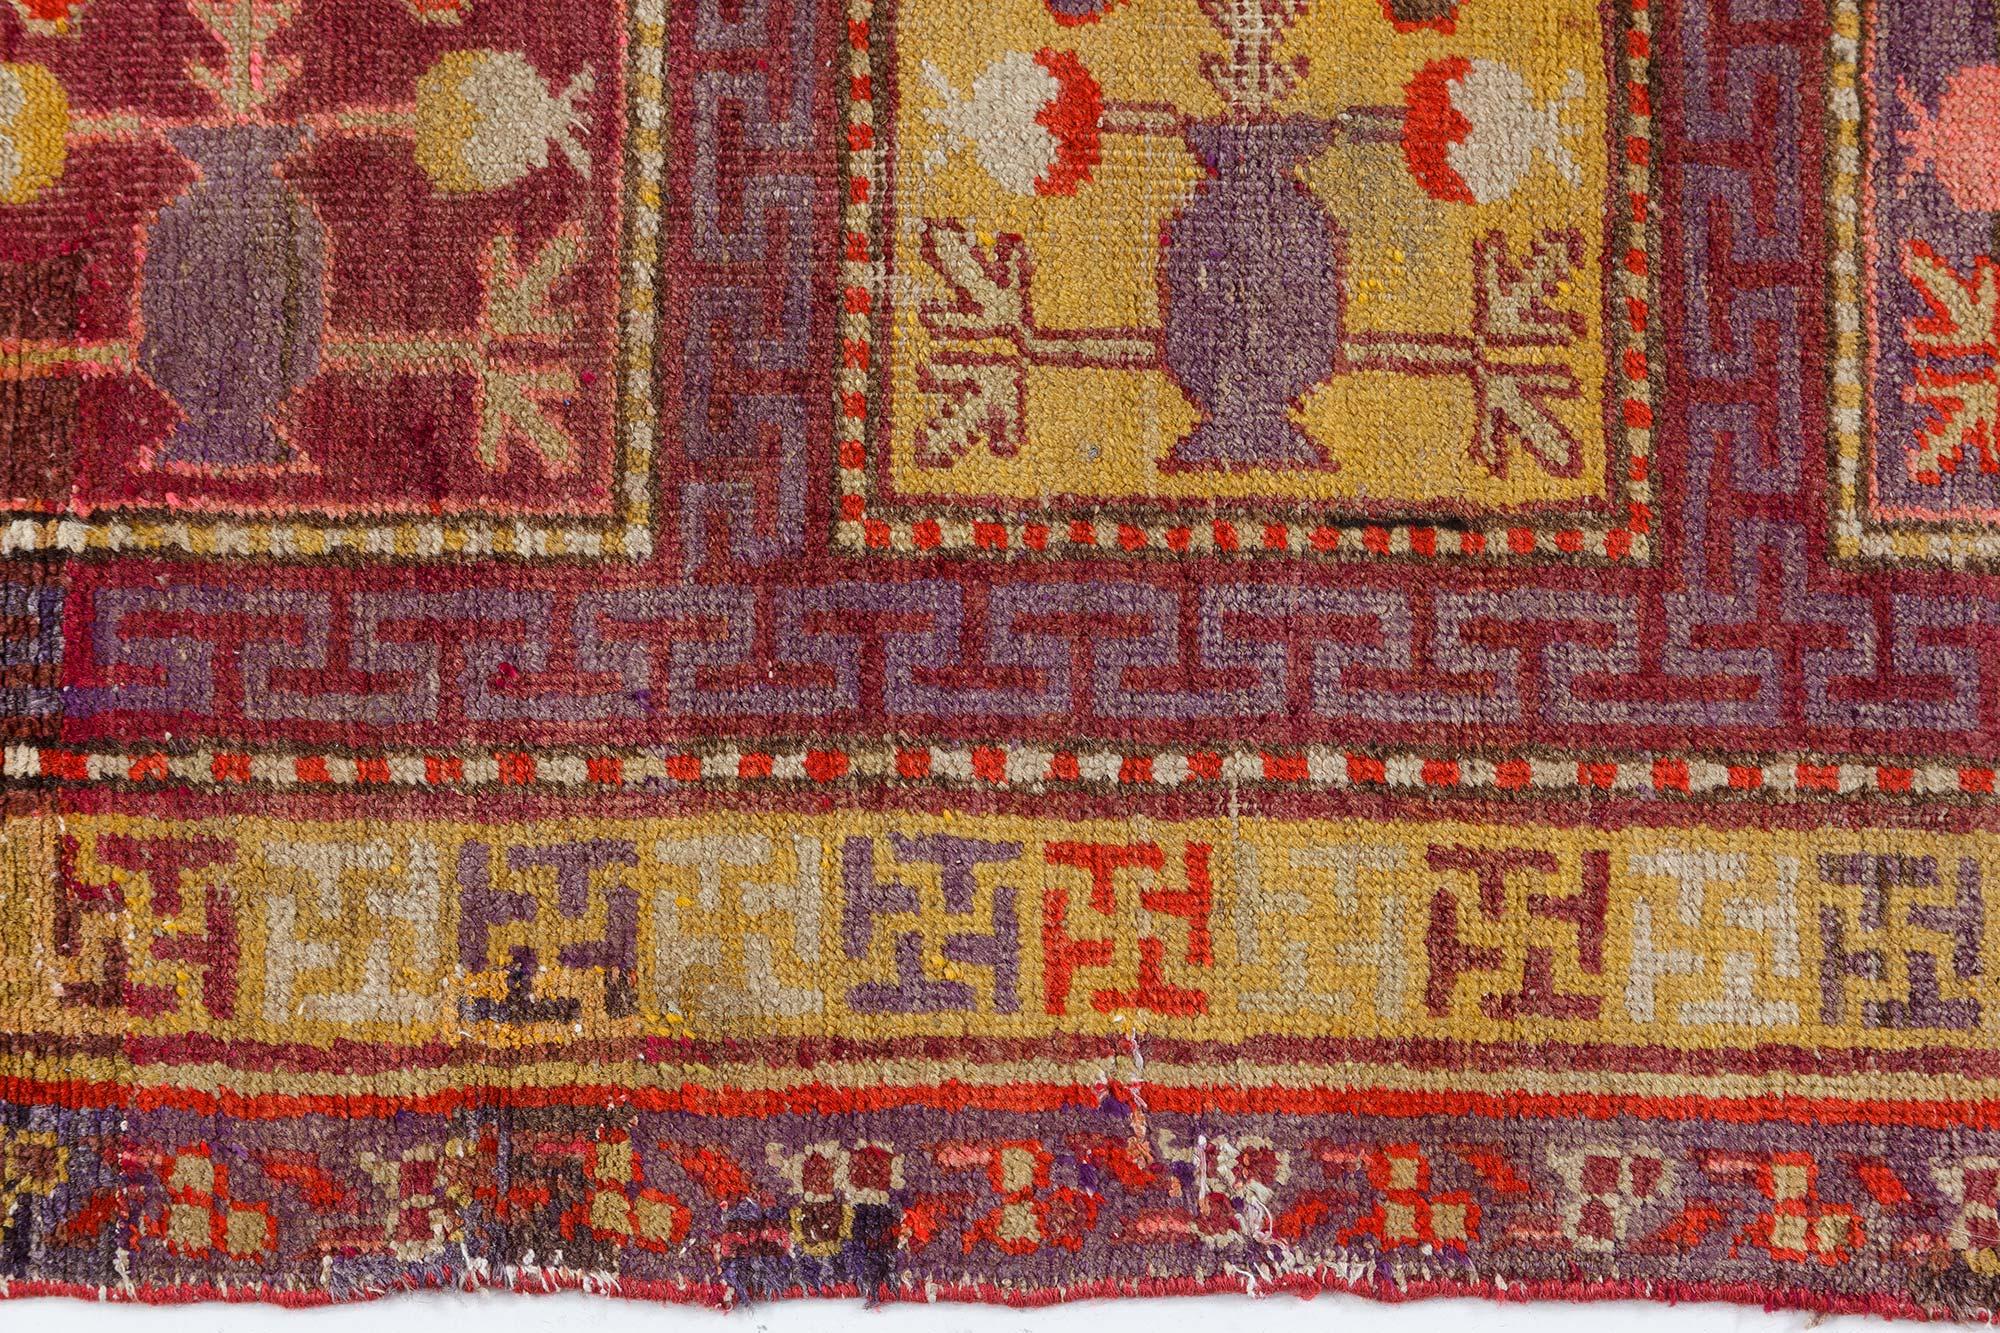 Mid-20th century Khotan 'Samarkand' handmade wool rug in purple, red and yellow.
Size: 4'11